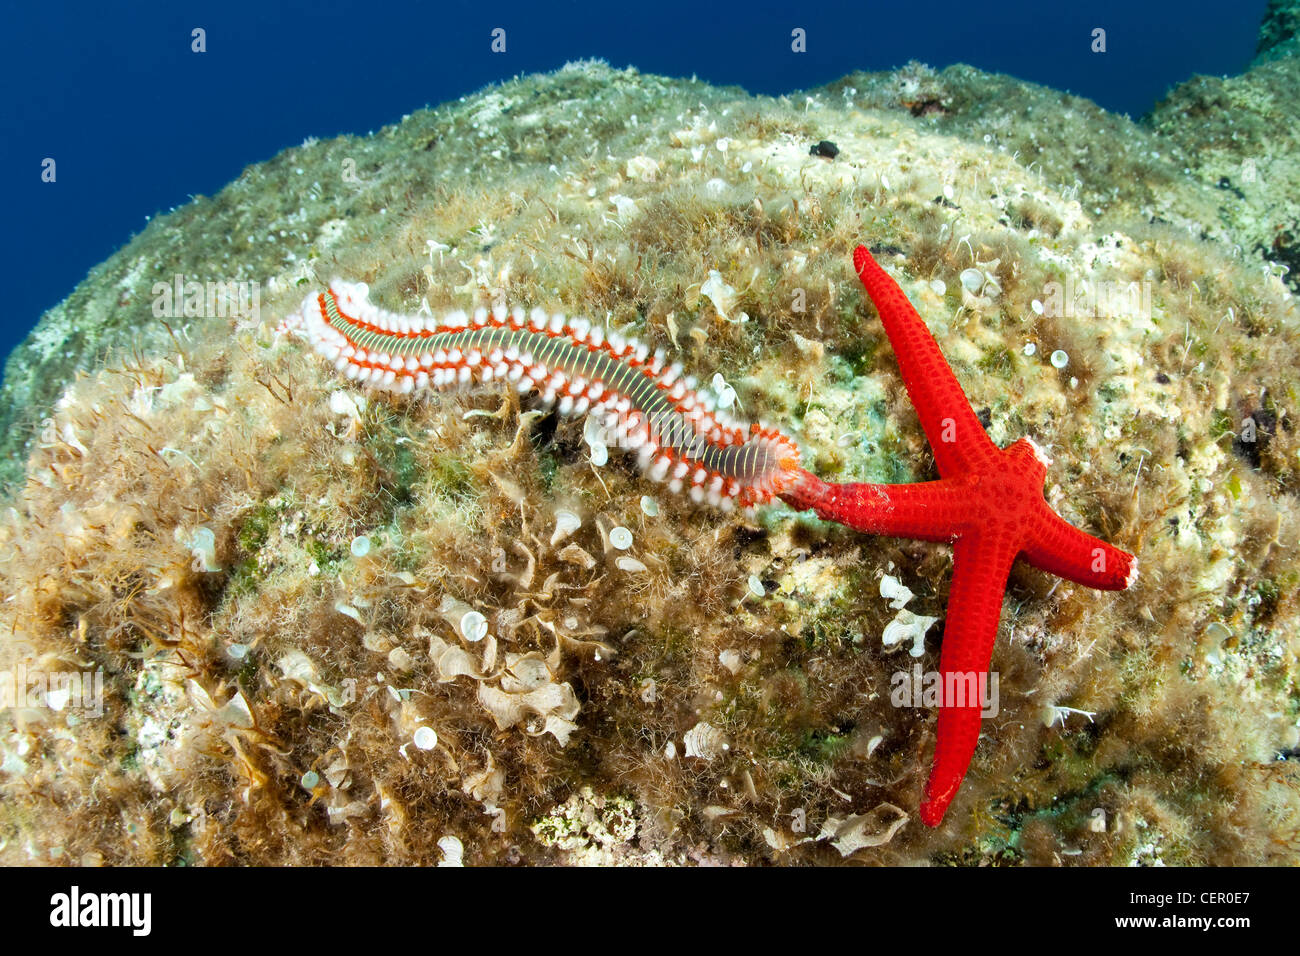 Fire Worm feeding on Sea Star, Hermodice carunculata, Vis Island, Adriatic Sea, Croatia Stock Photo